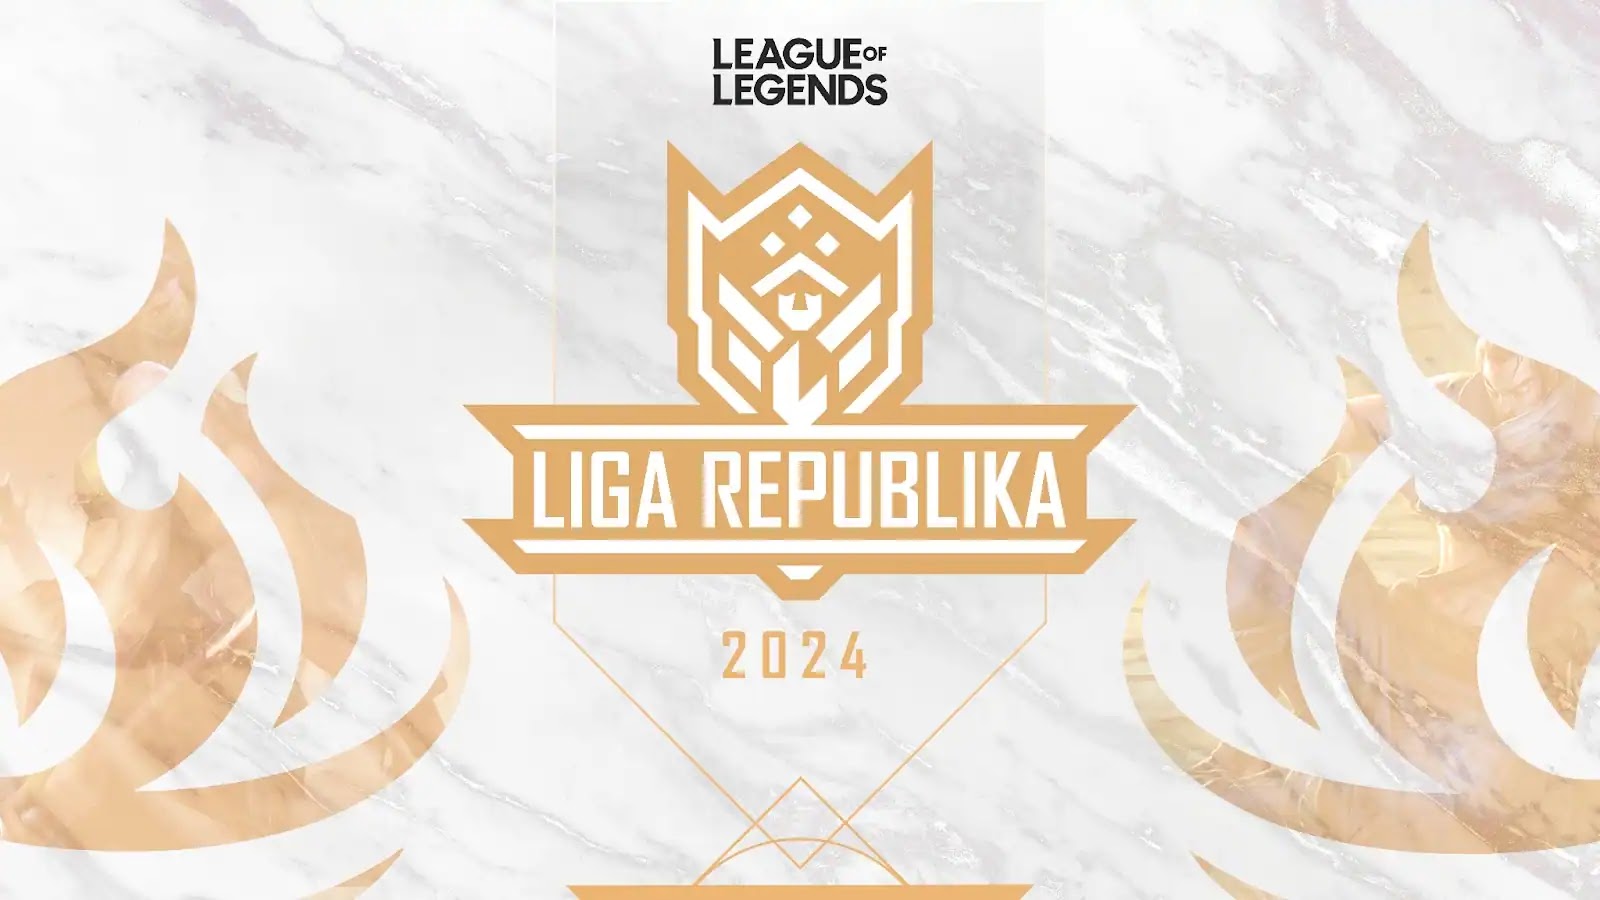 League of Legends Liga Republika